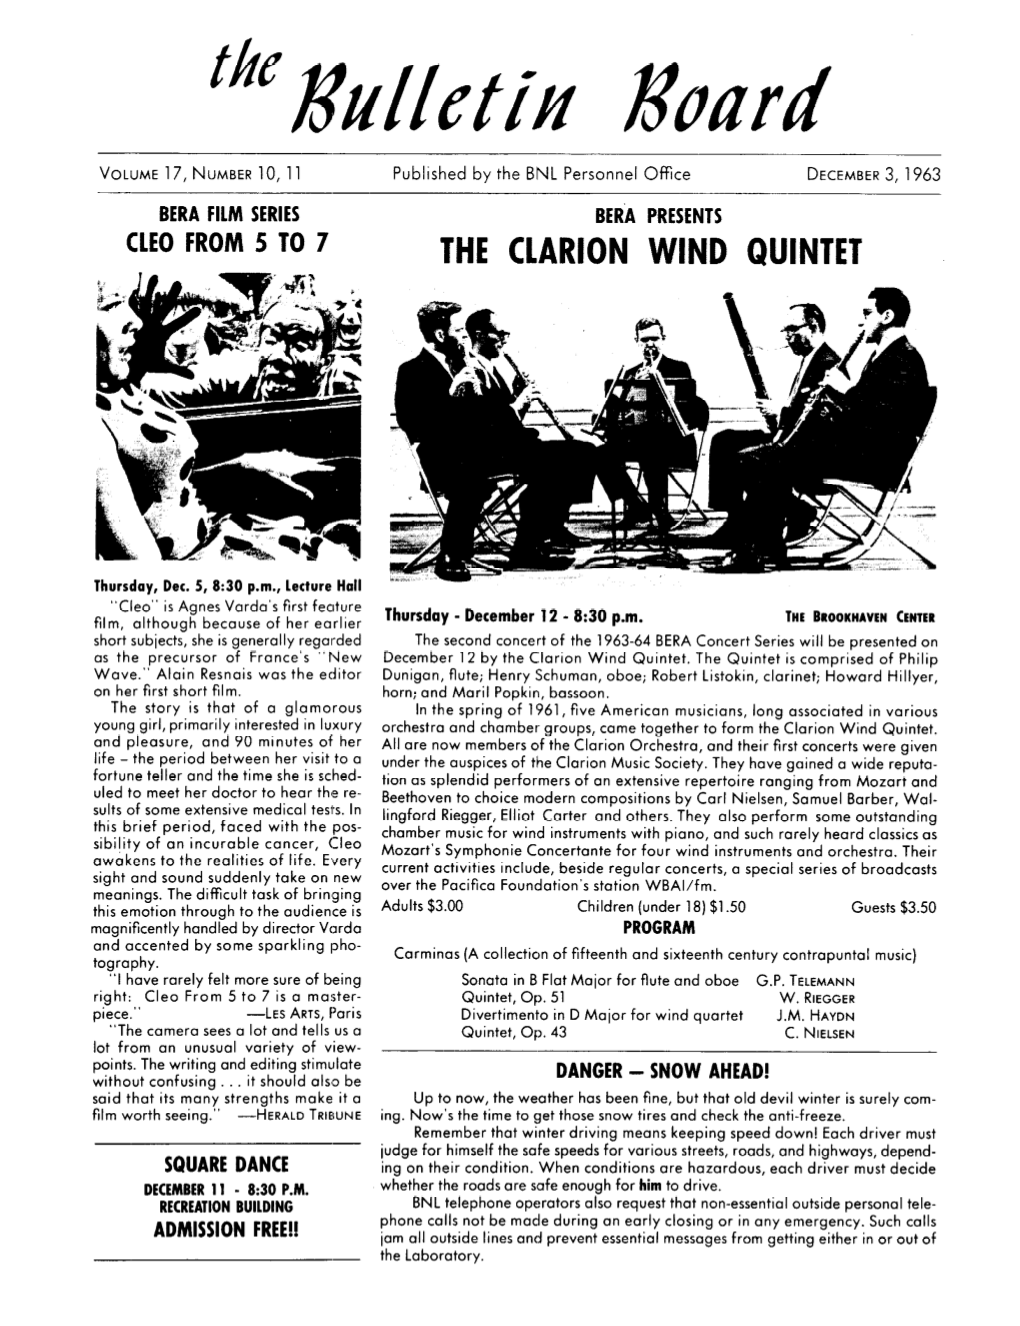 The Clarion Wind Quintet